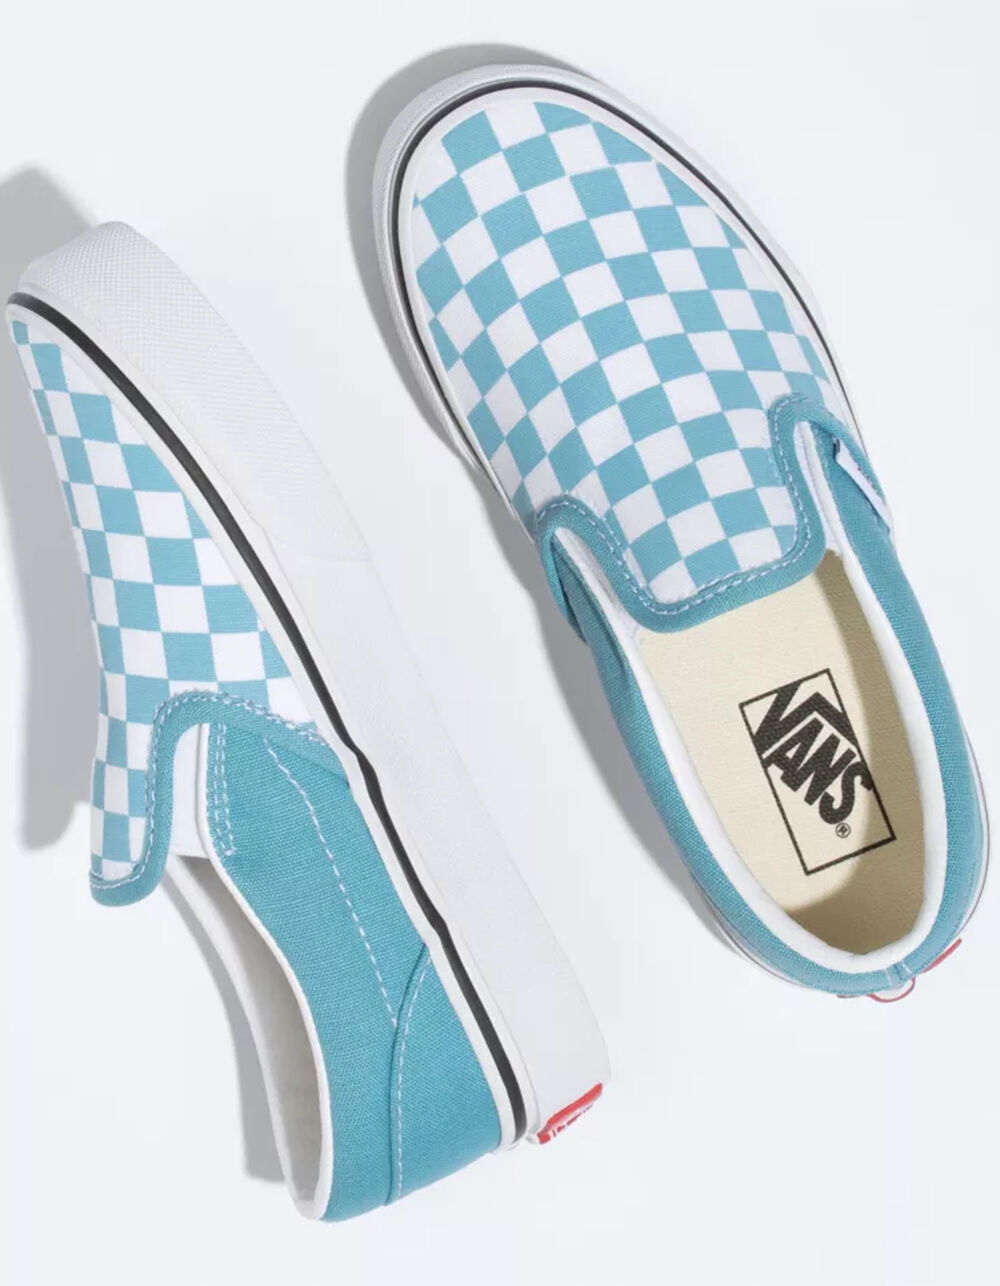 VANS Checkerboard Classic Slip-On Girls Shoes - DELPHINIUM BLUE/TRUE ...